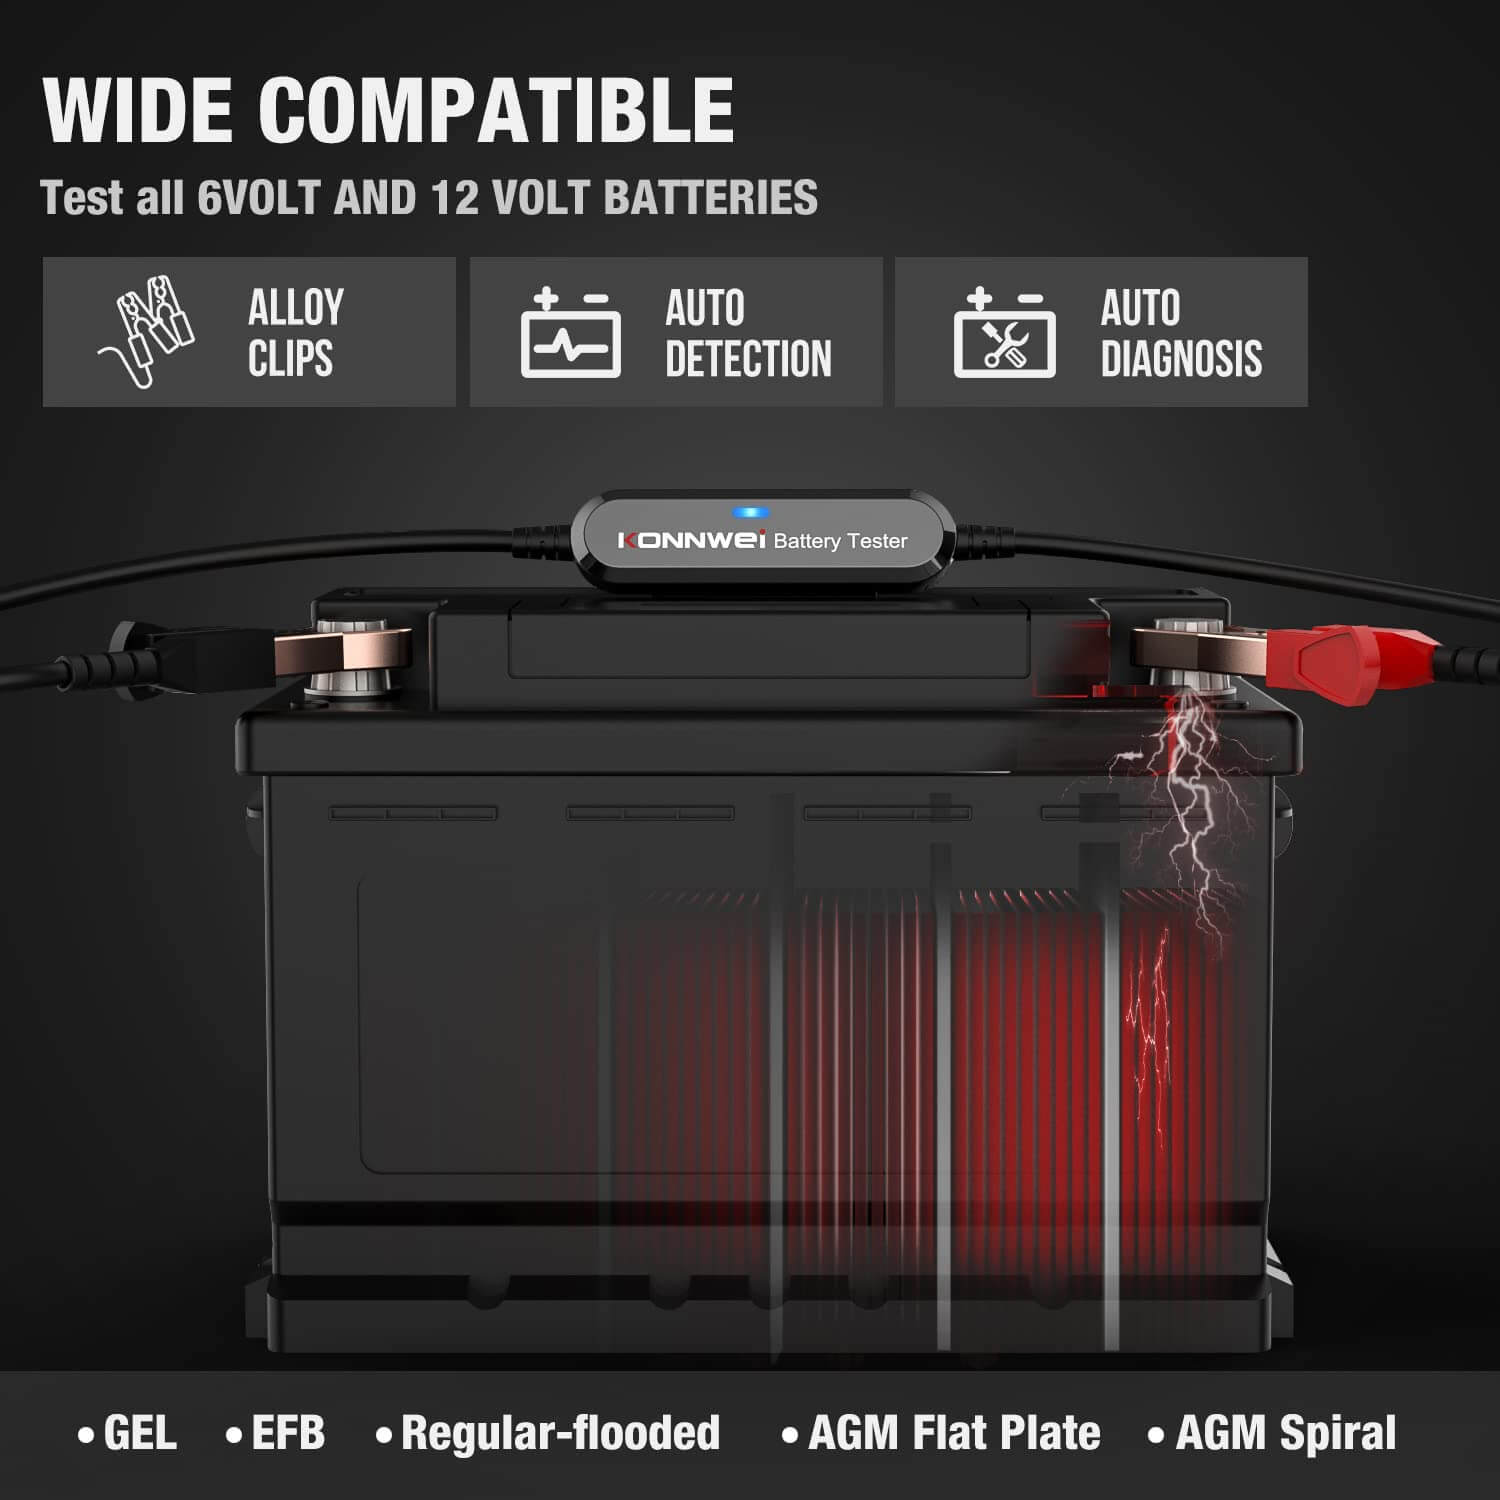 BK100 battery compatibility